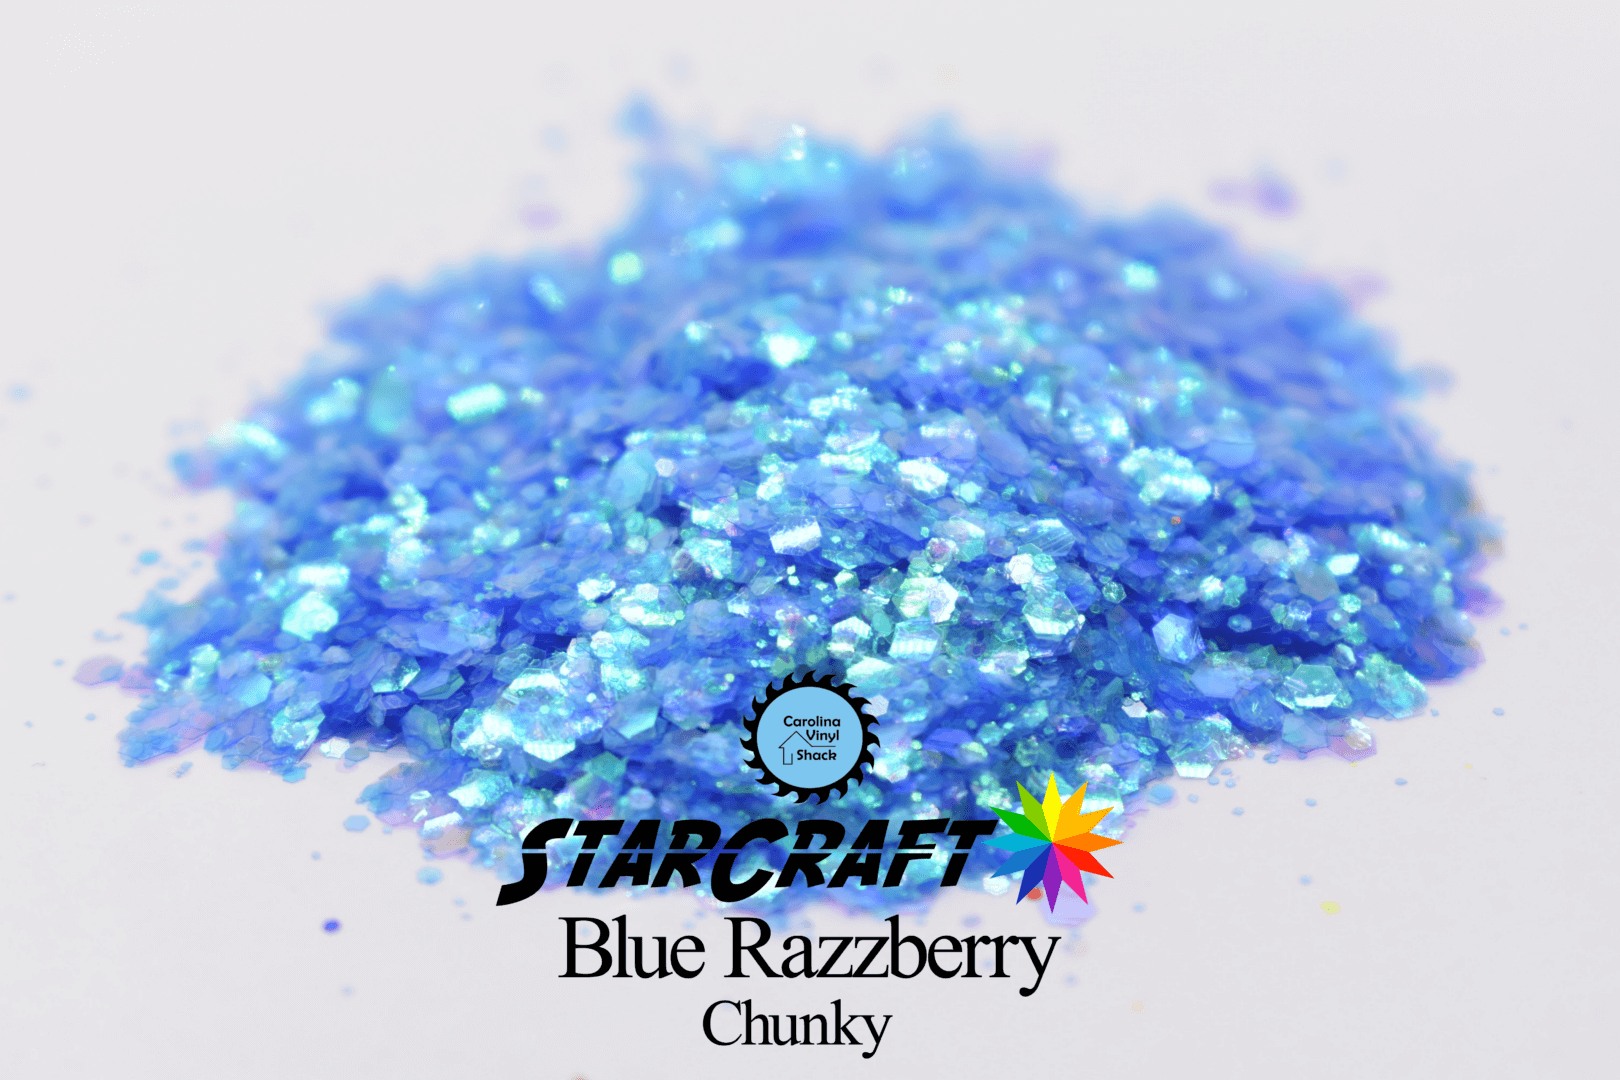 Carolina Vinyl Shack- Starcraft Blur Razzberry Chunky